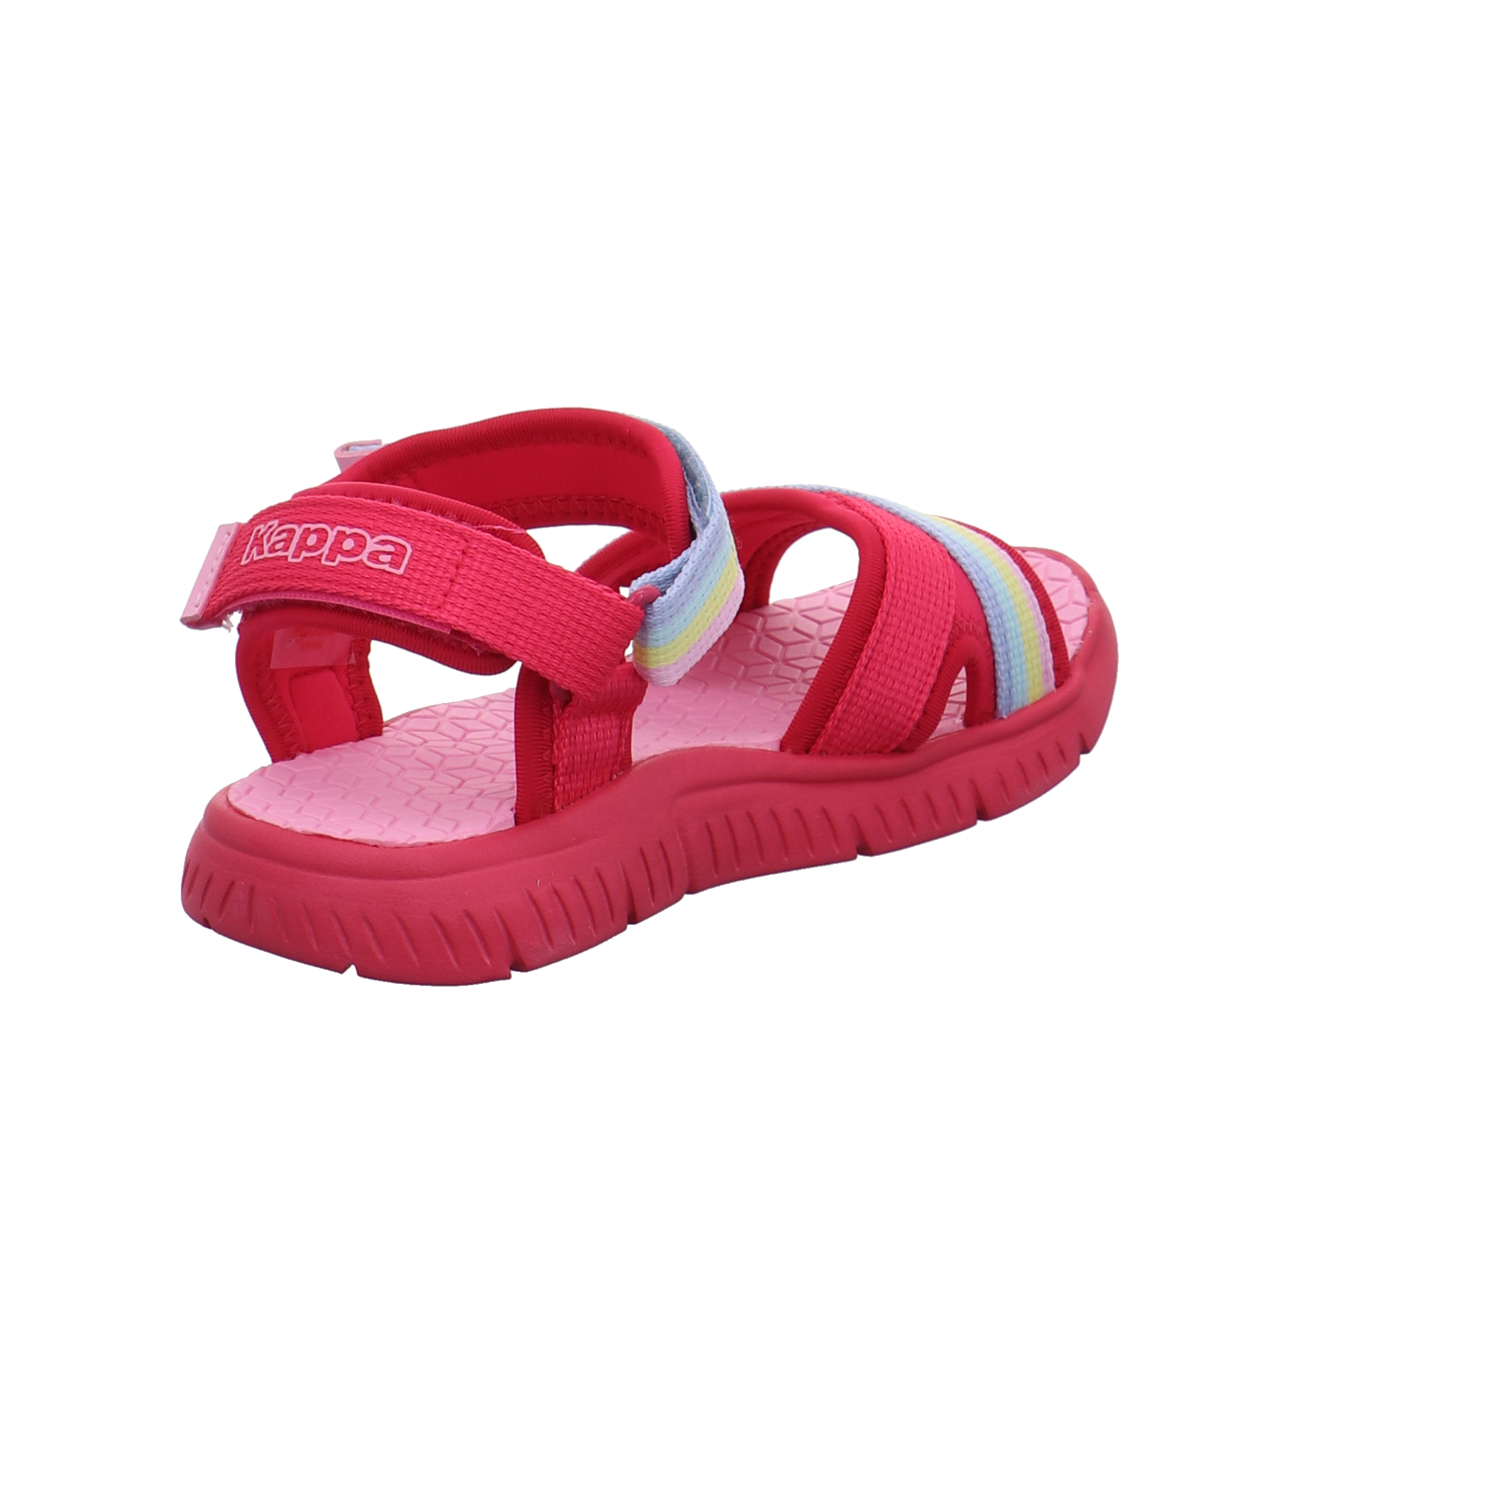 Kappa Offene Schuhe pink Bild5